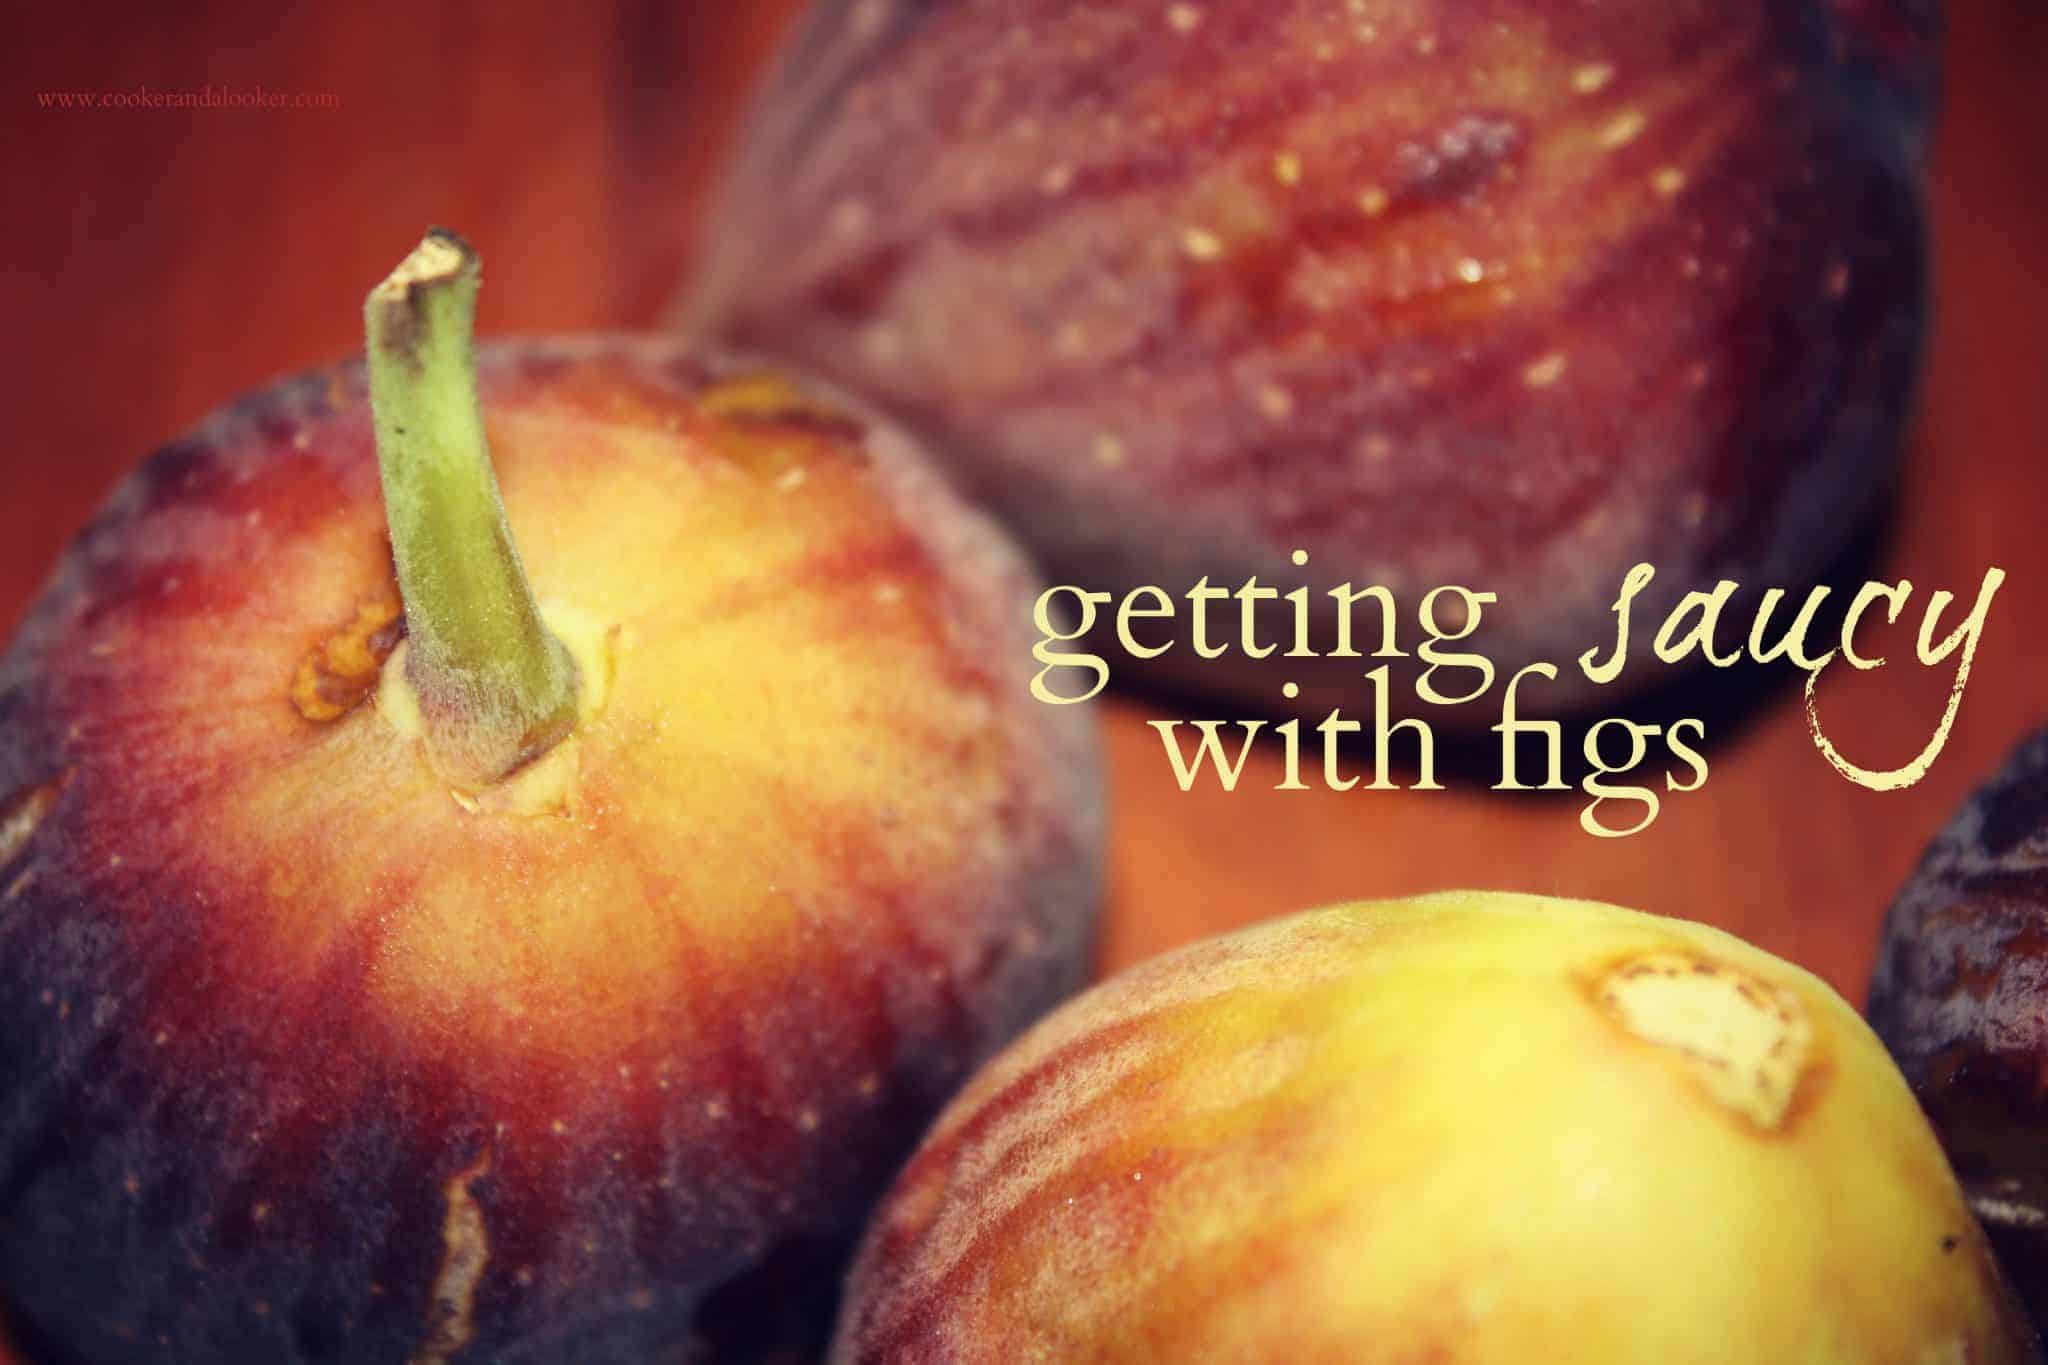 figs, recipe, sauce